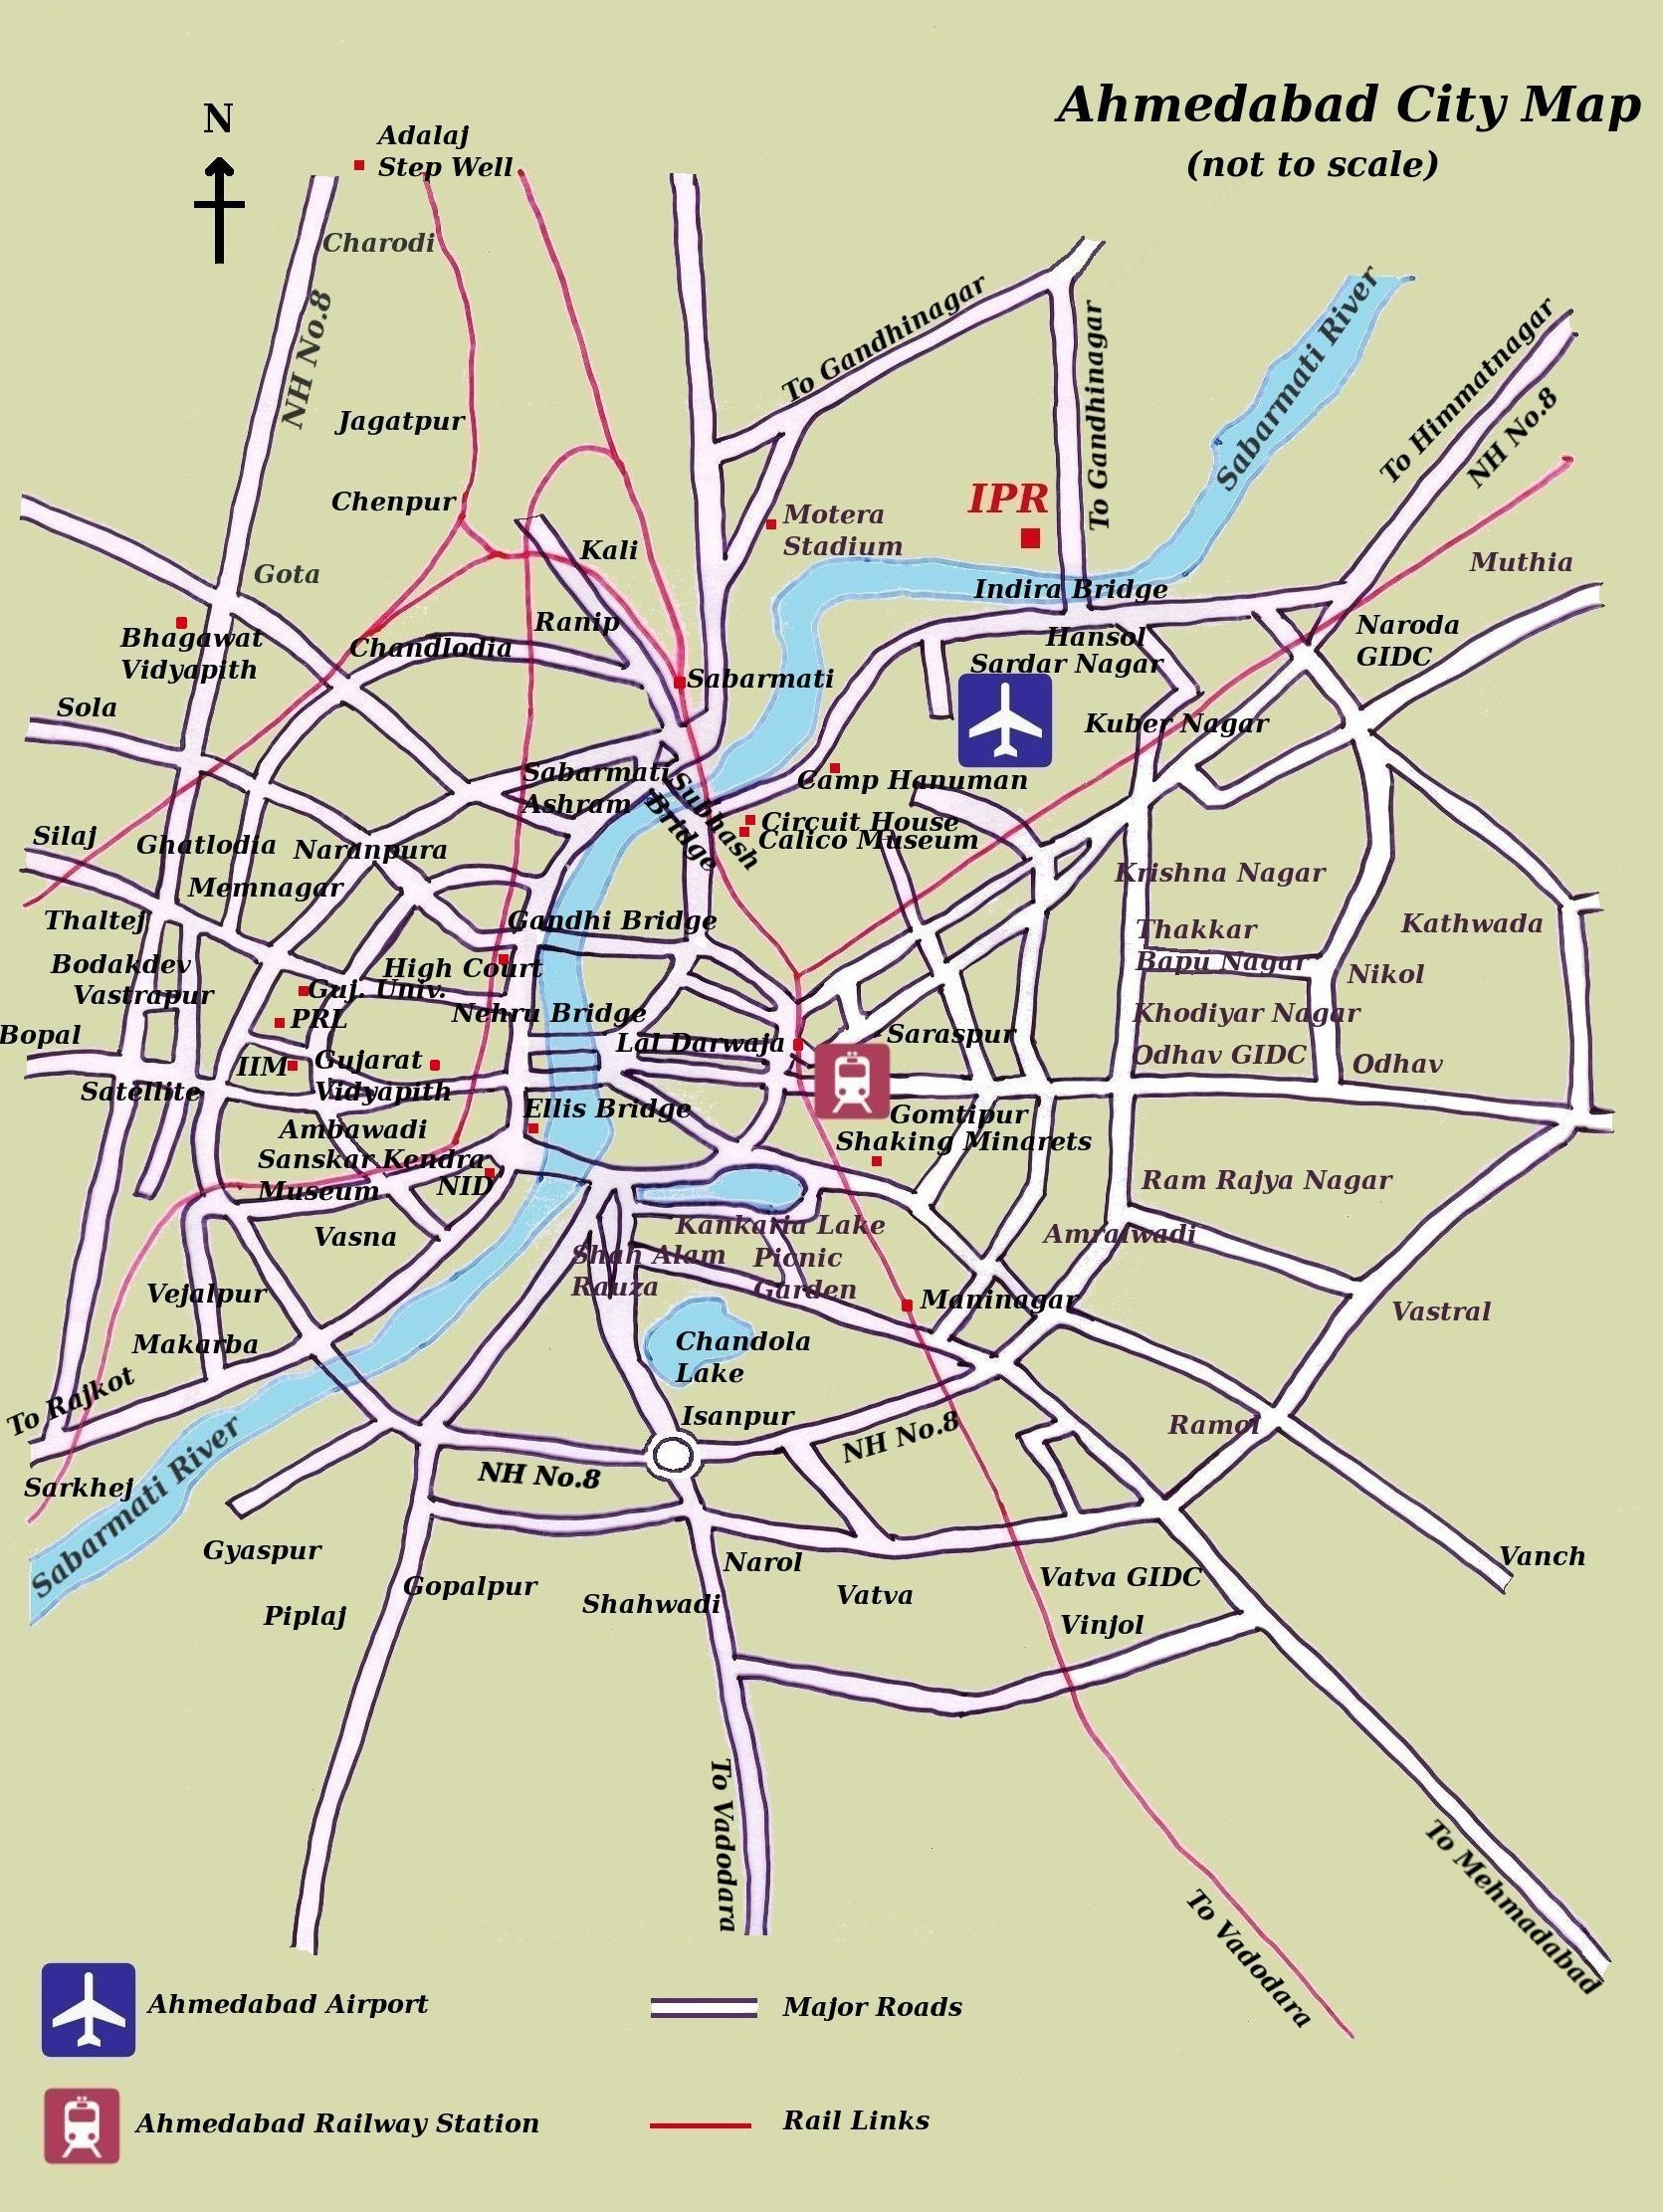 ahmedabad city map